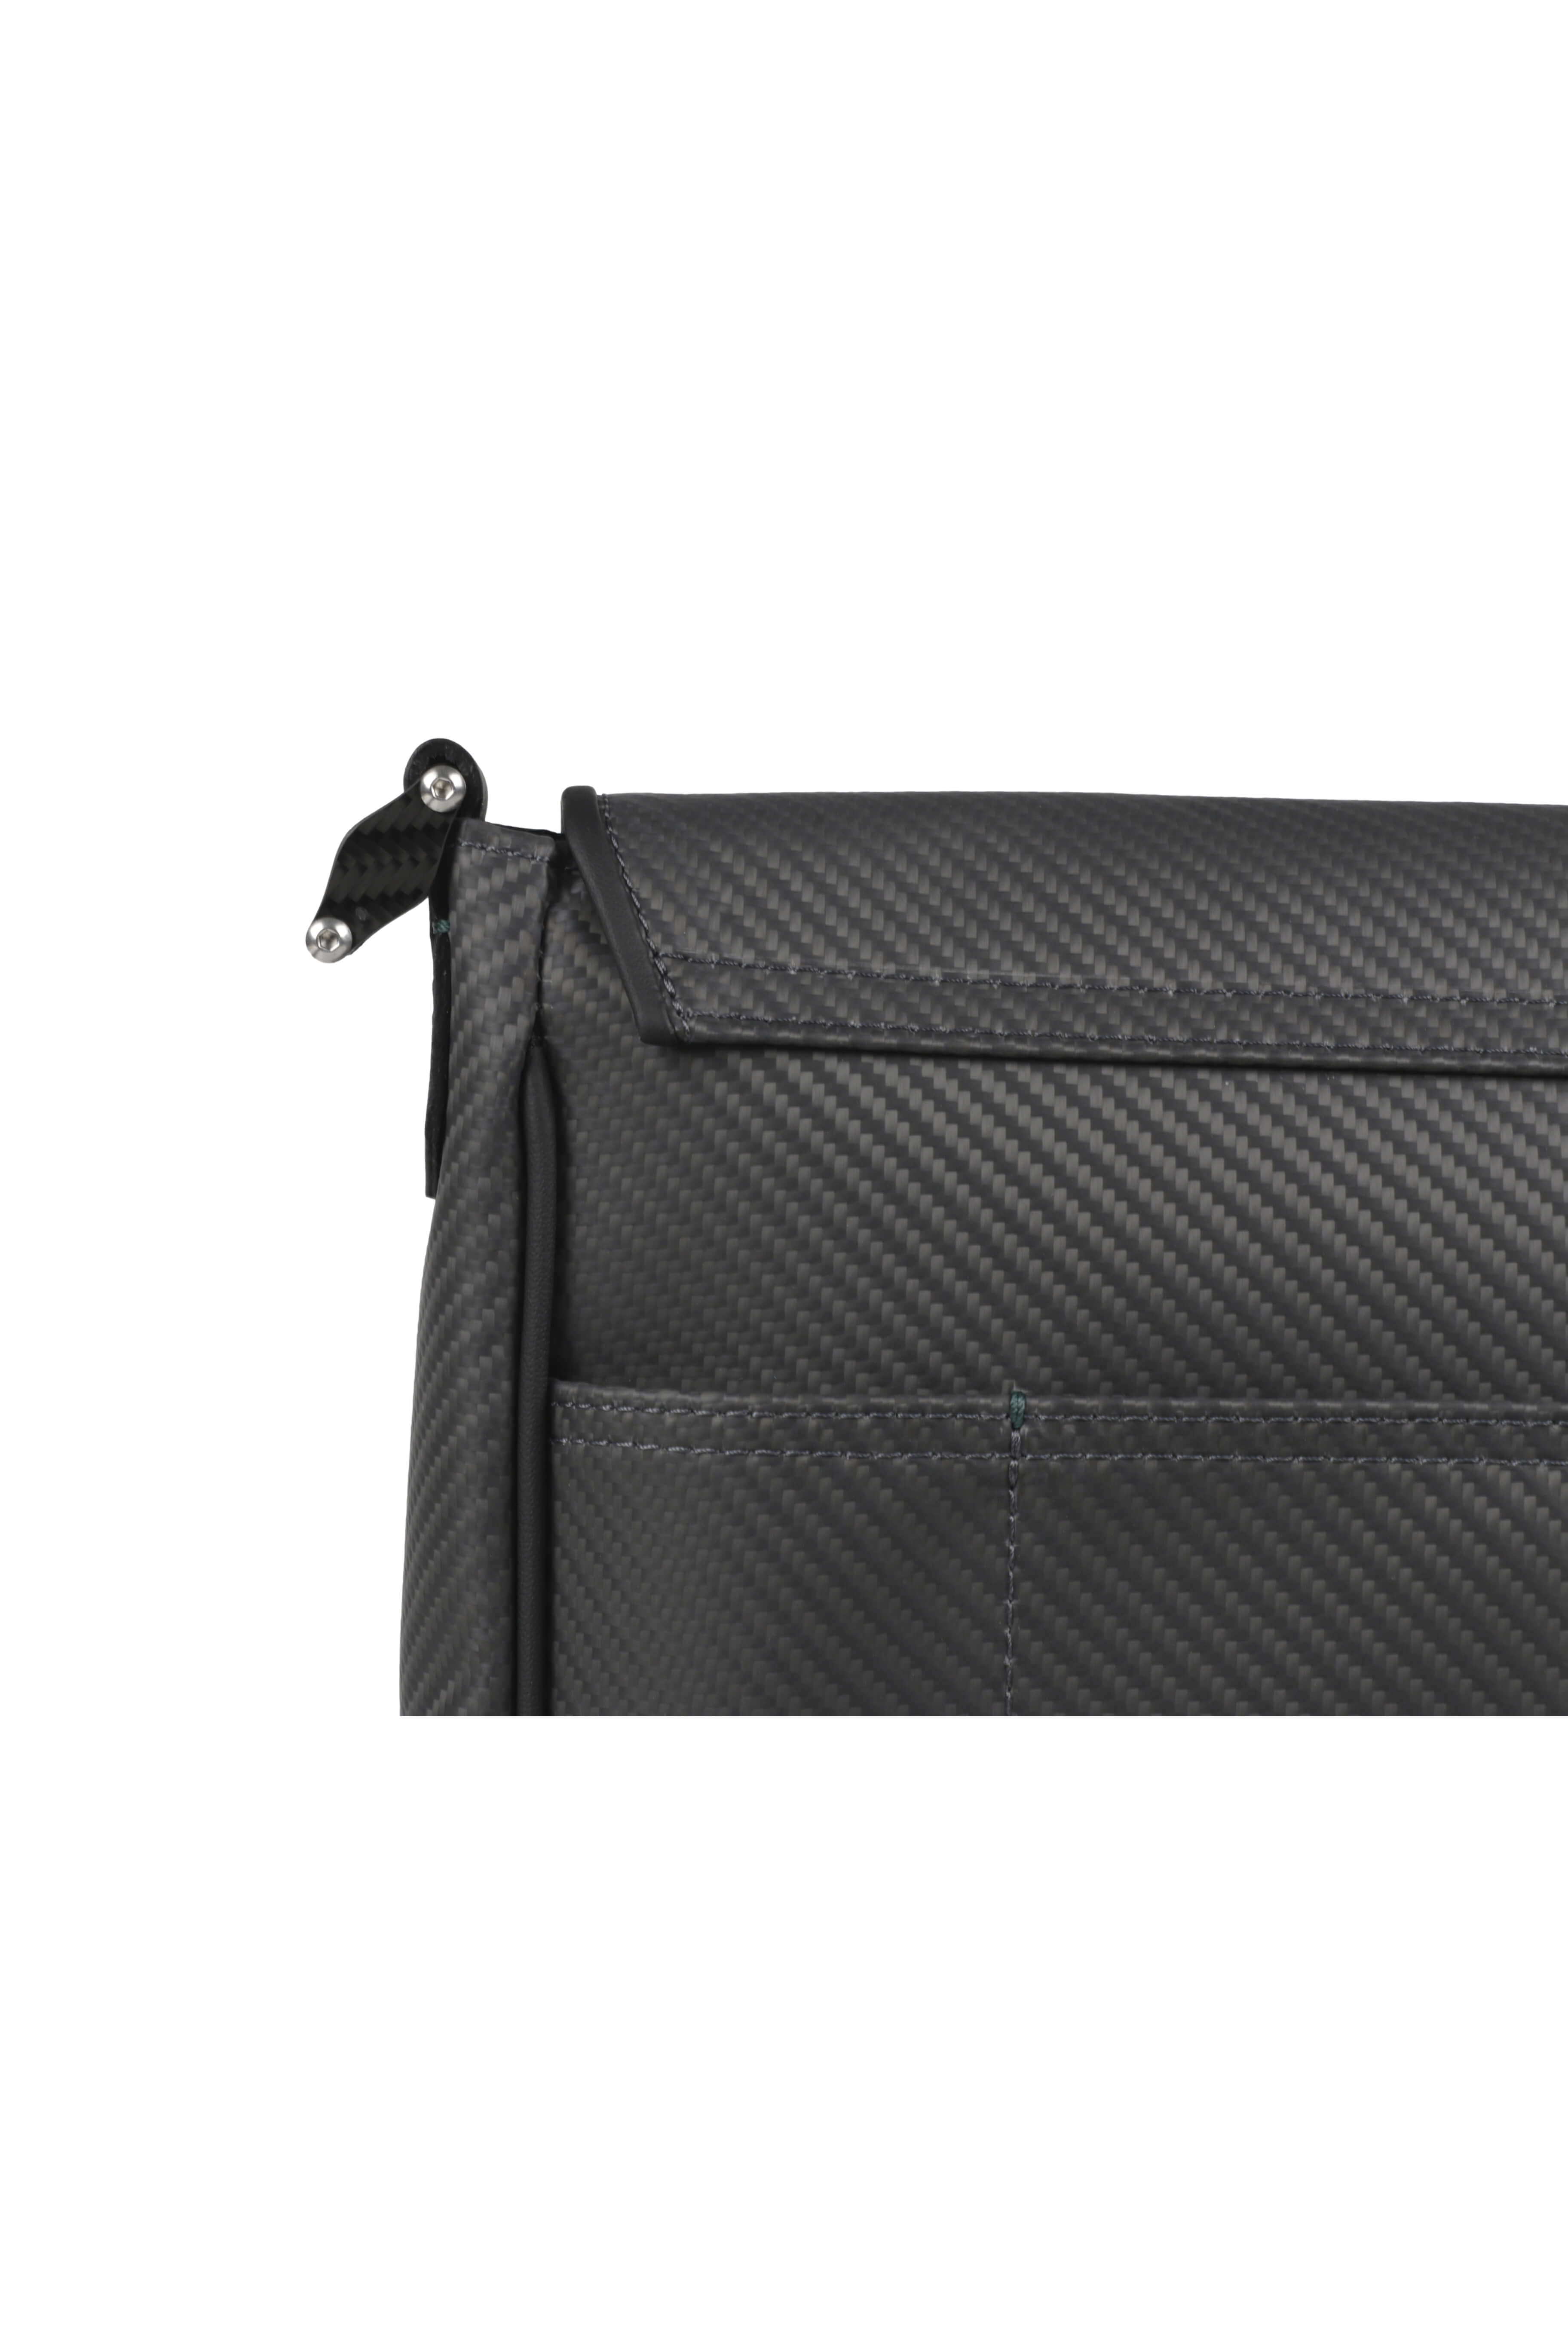 Peak Girello Soft Carbon Fiber Messenger Bag, Black